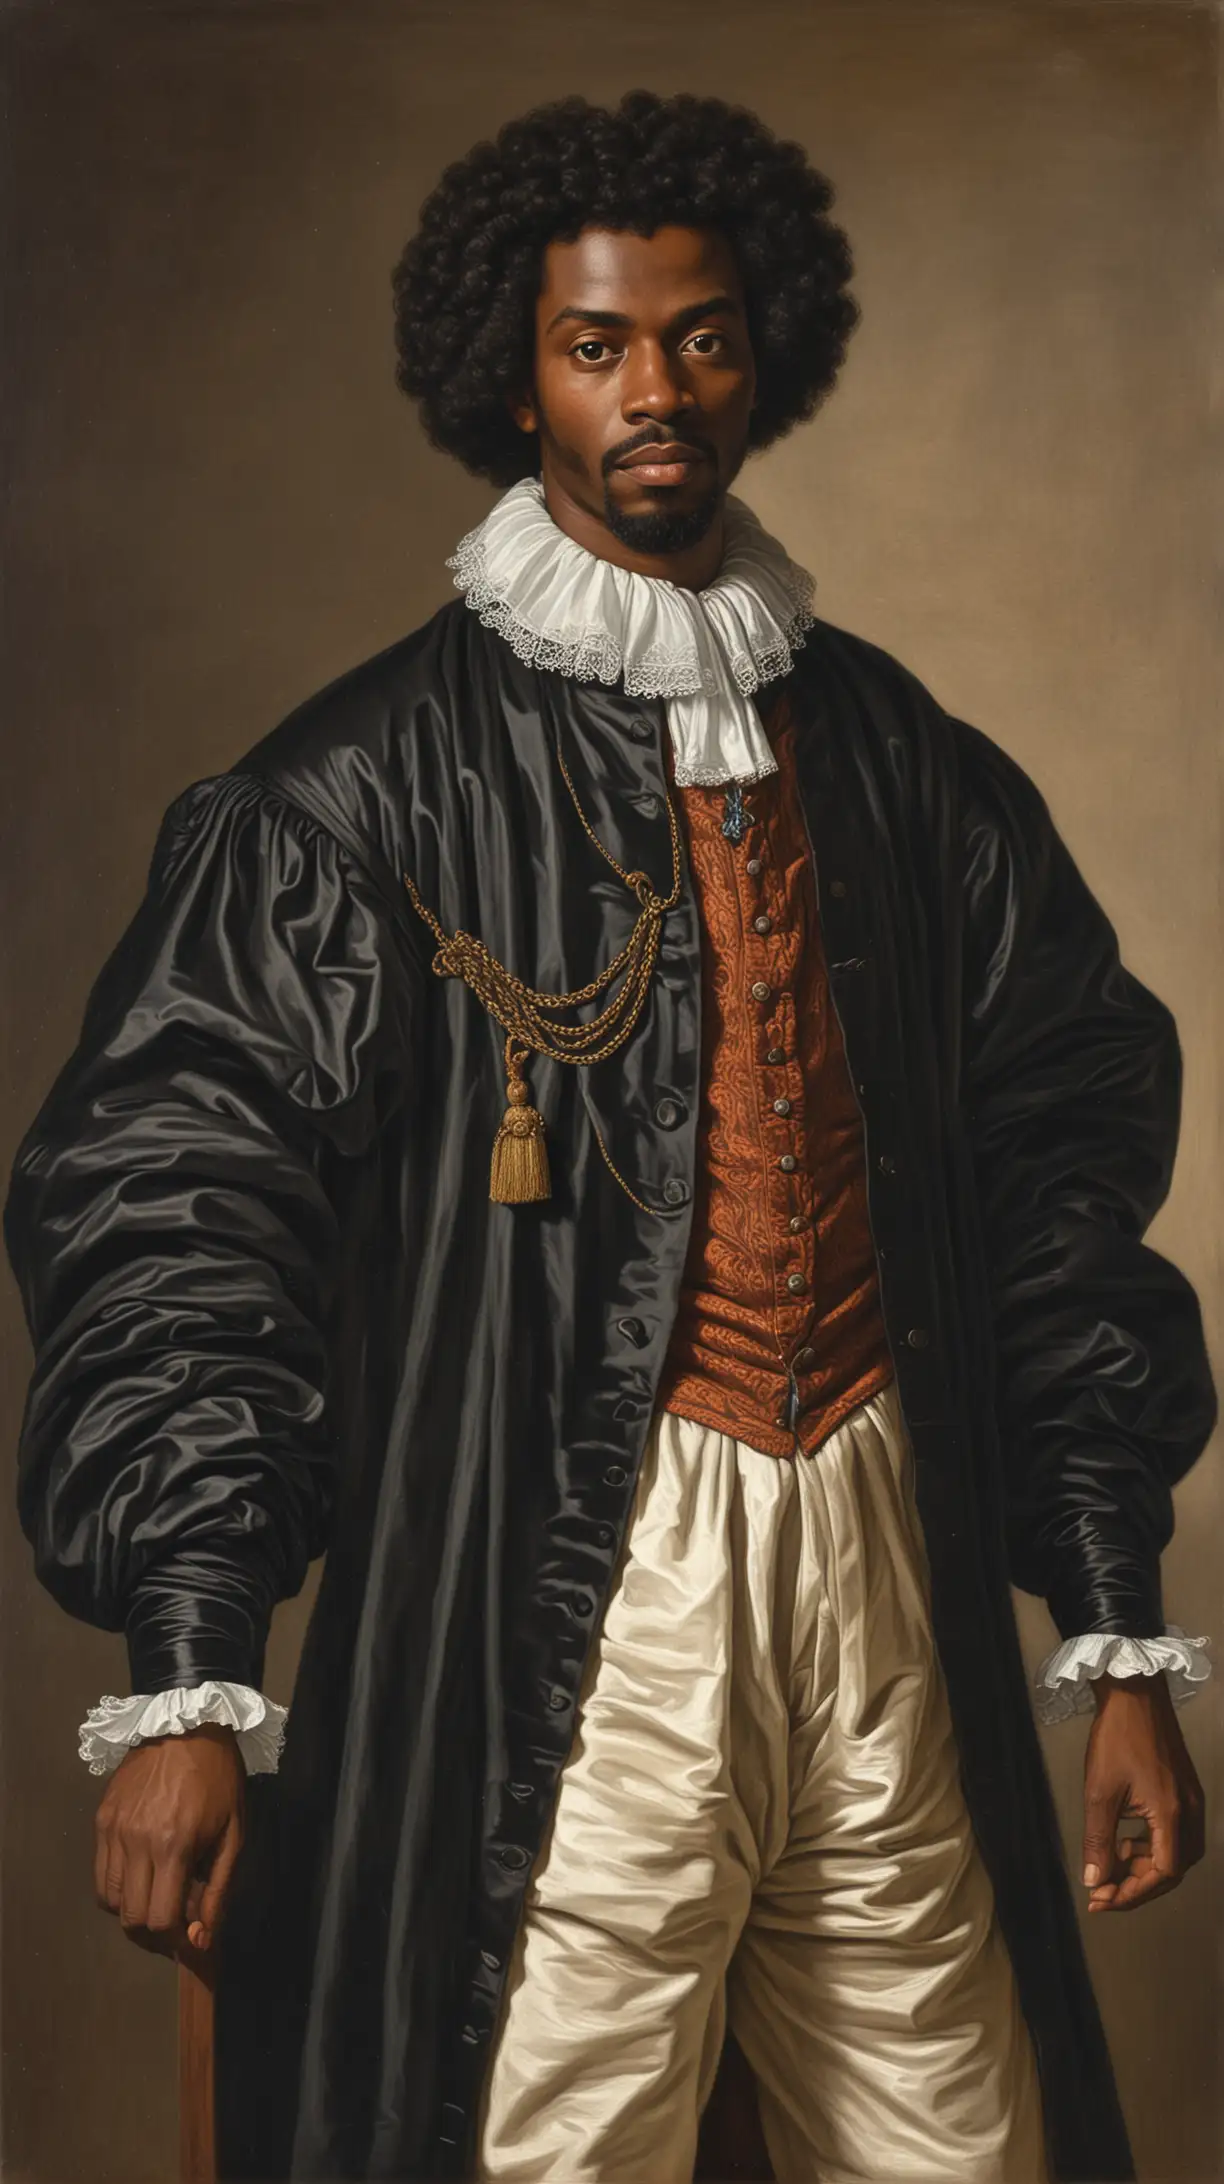 Seventeenth Century Black Man Portrait with Ornate Attire and Regal Demeanor